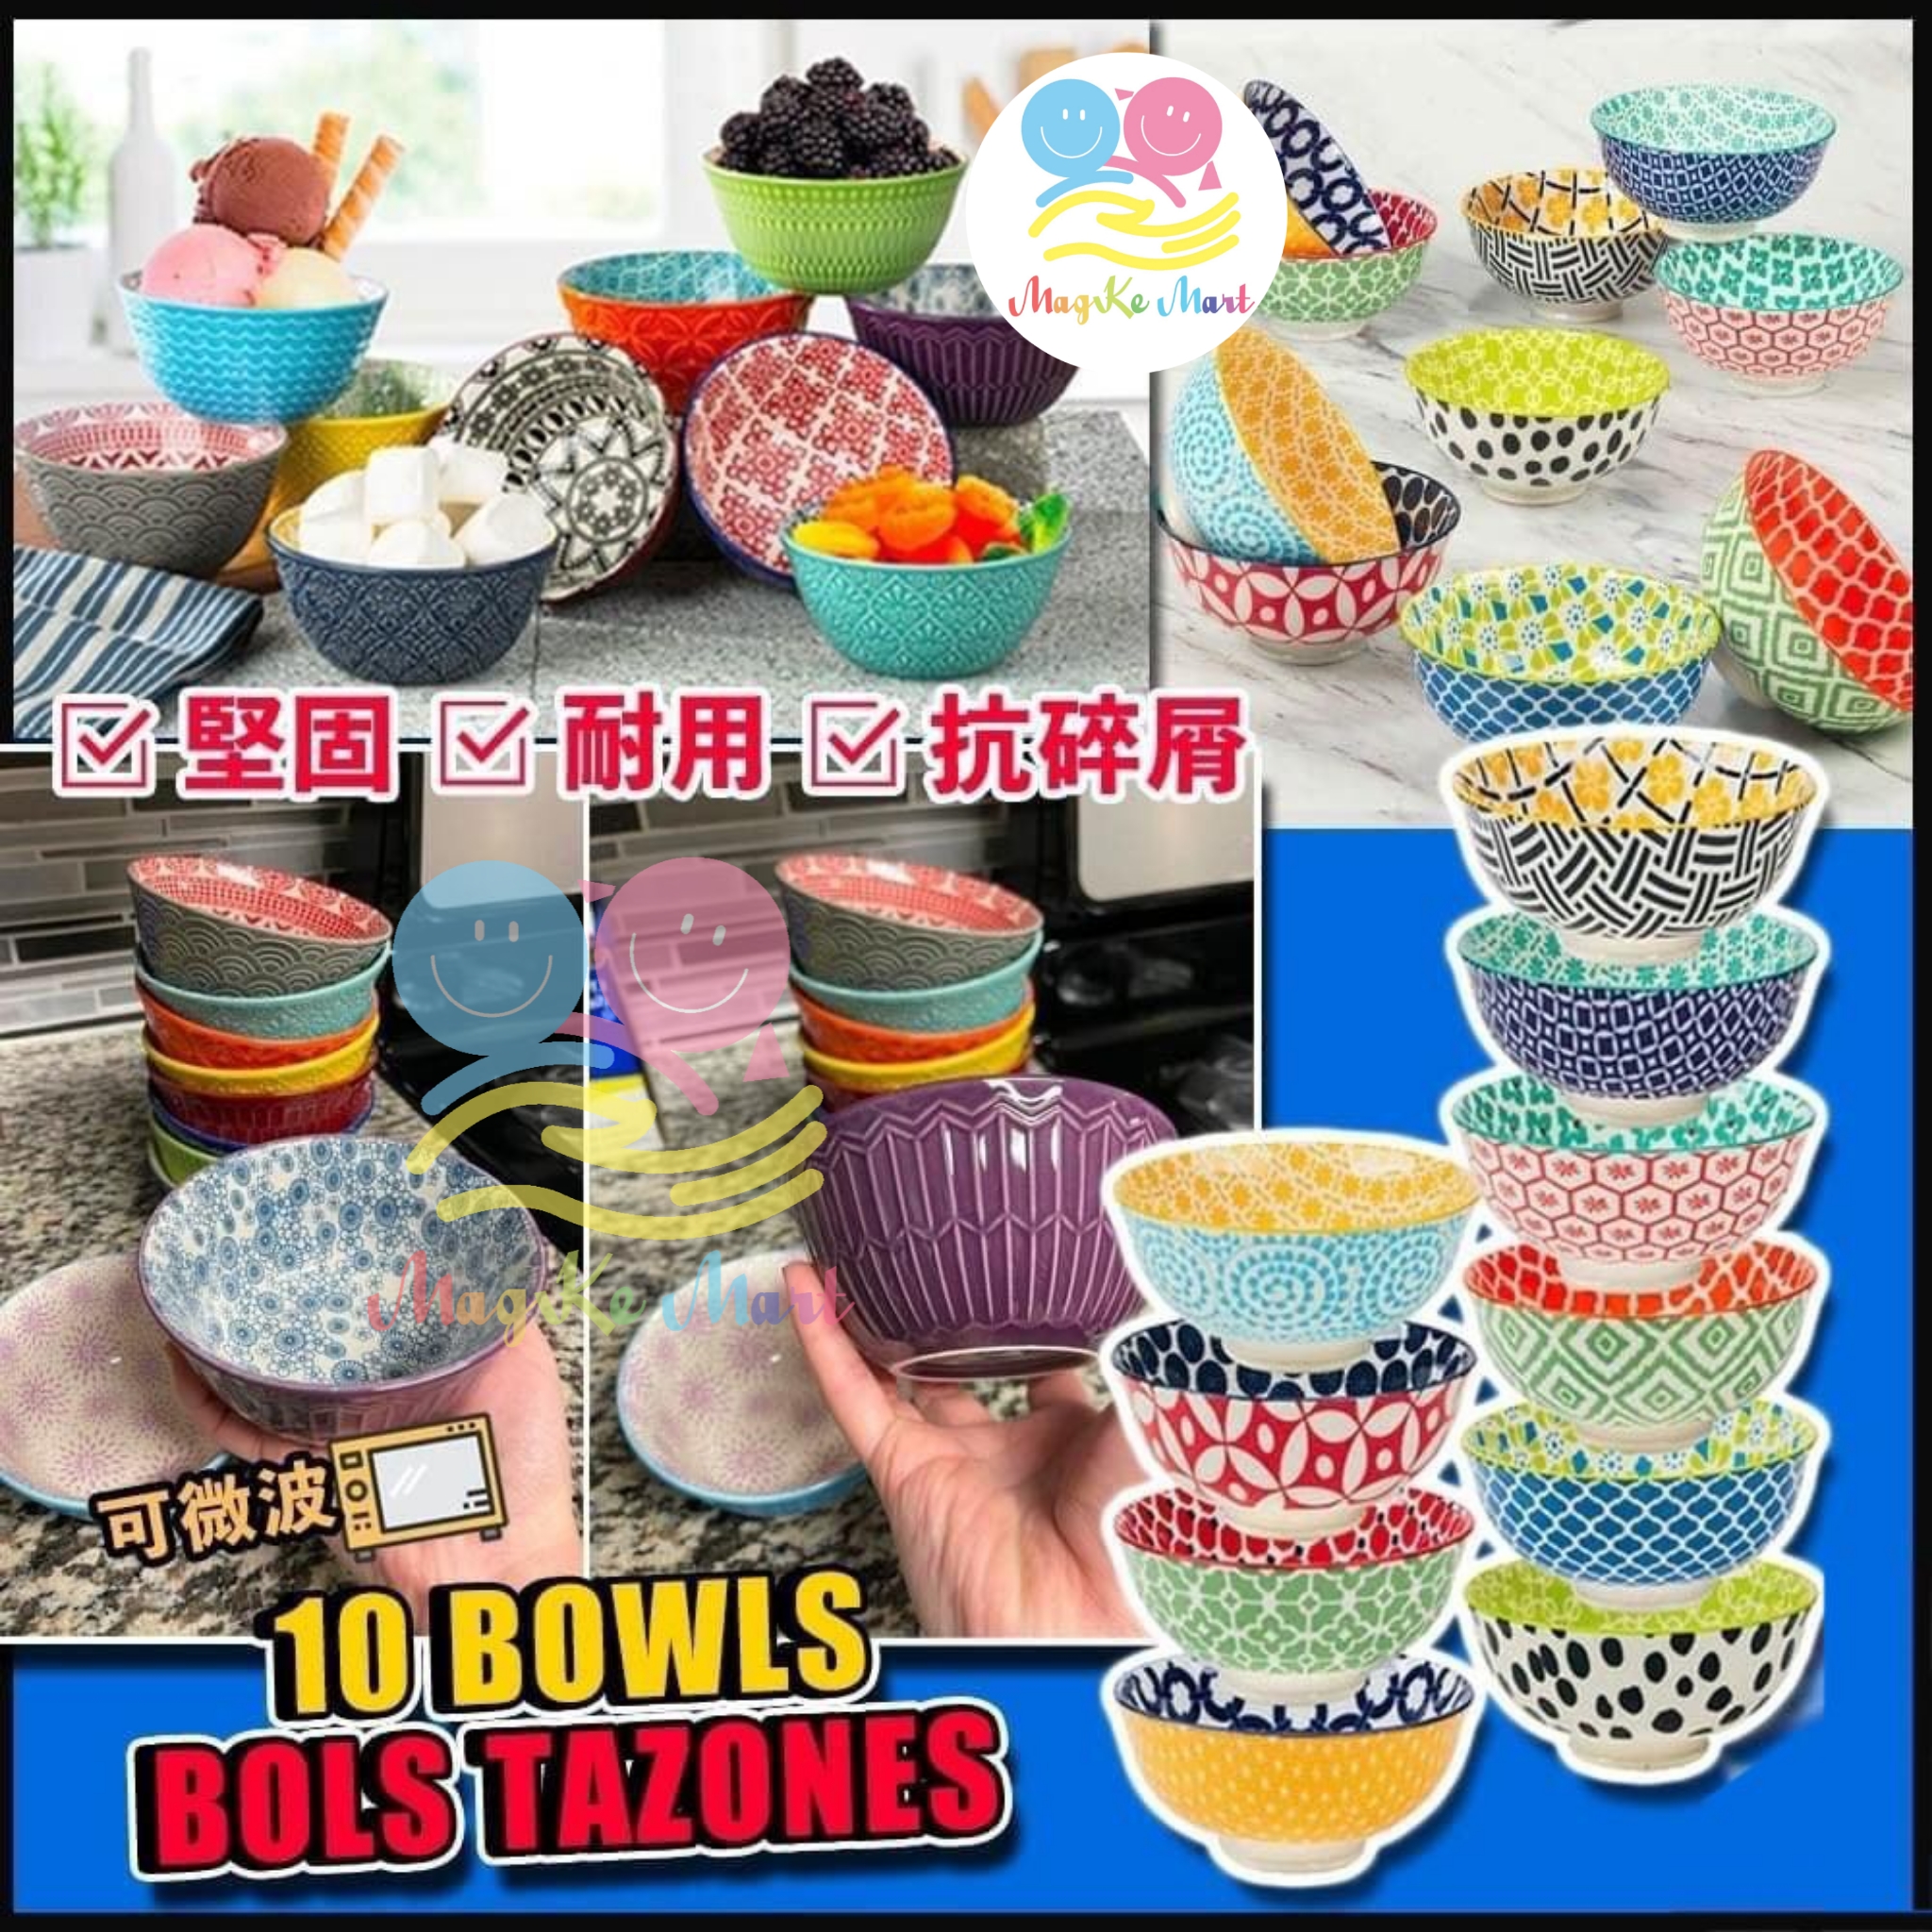 SIGNATURE Bols Tazones 花紋飯碗套裝 (1套10個)